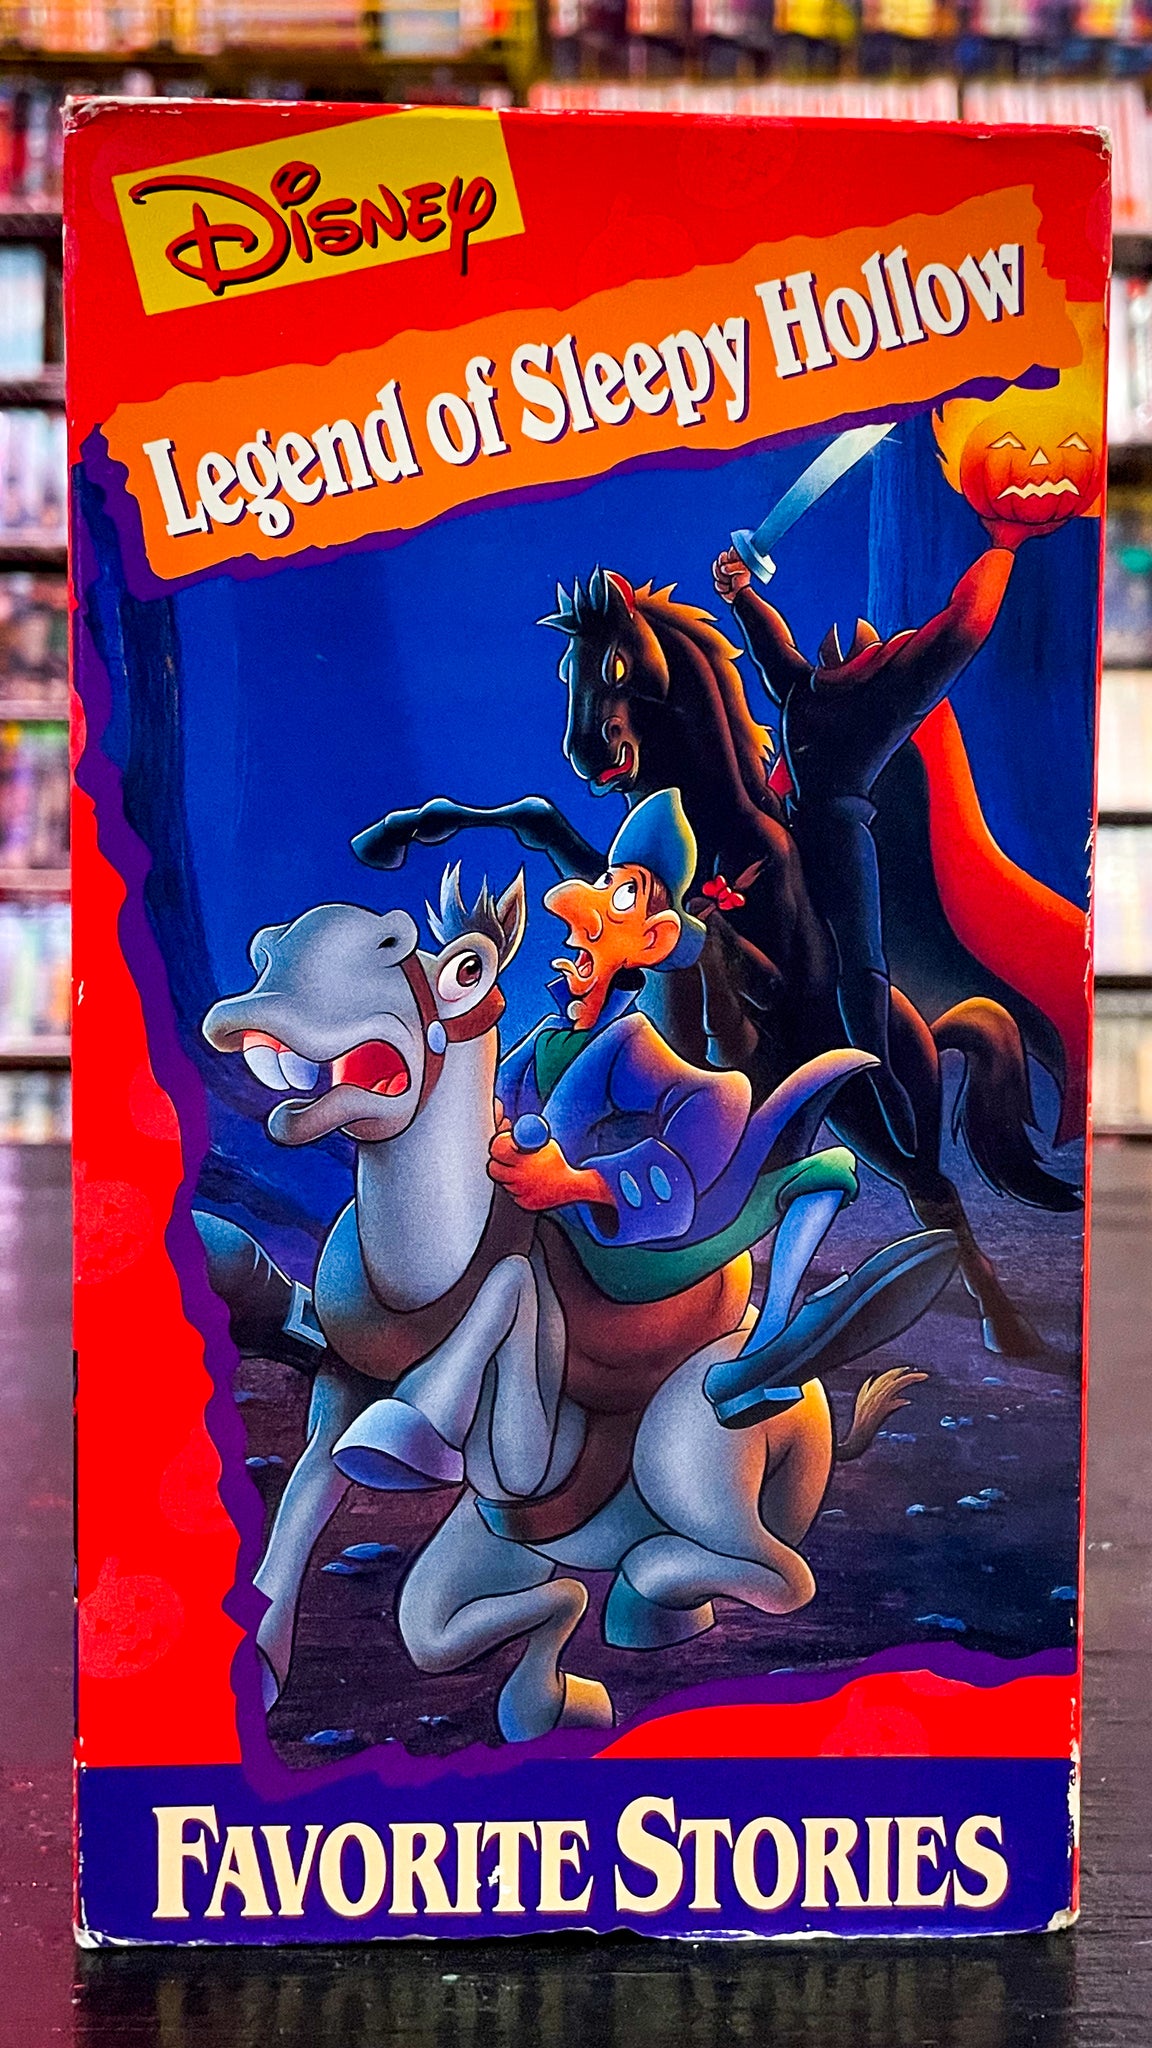 Disney Favorite Stories: Legend of Sleepy Hollow – WHAMMY